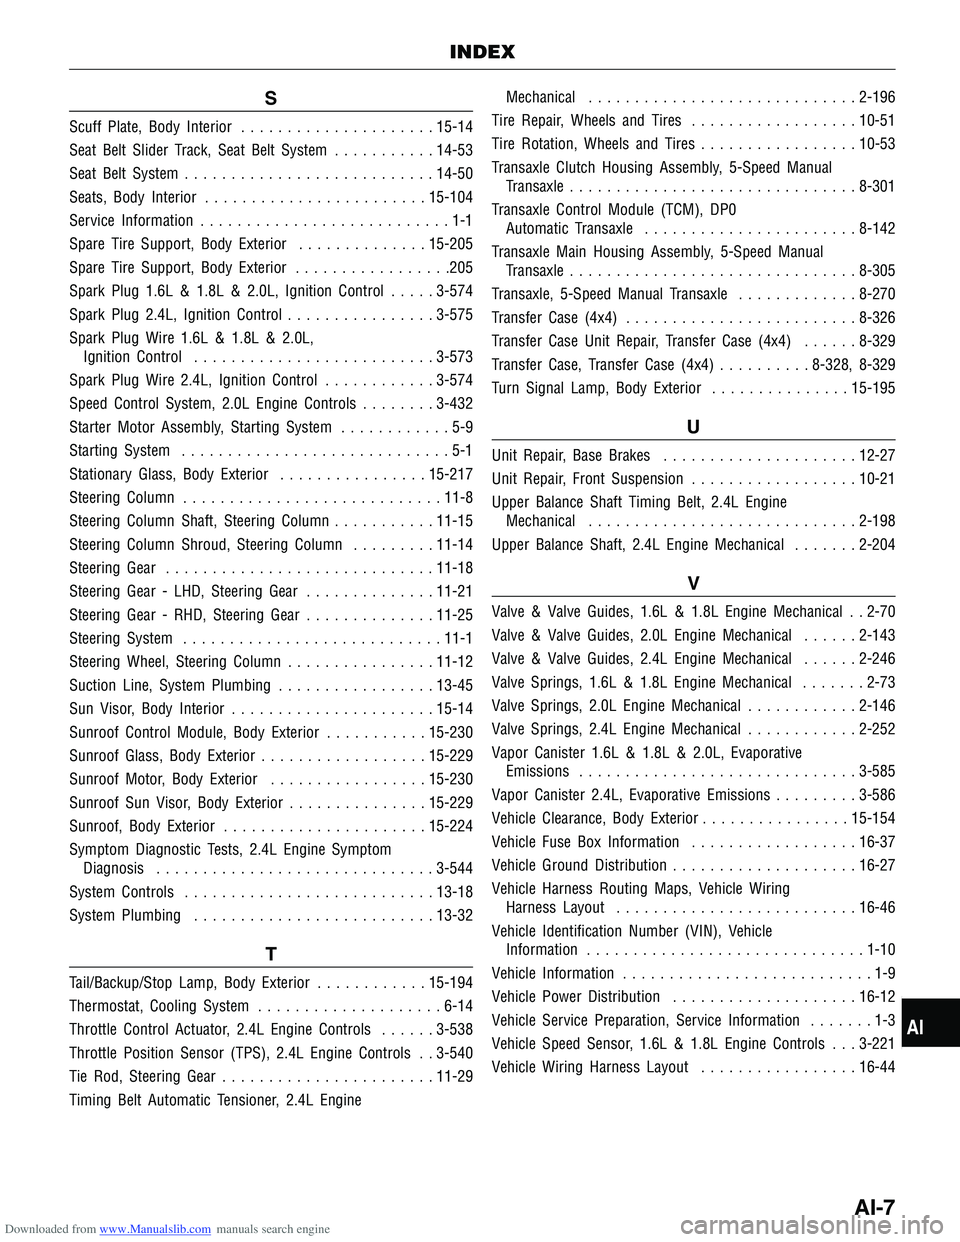 CHERY TIGGO 2009  Service Manual PDF Downloaded from www.Manualslib.com manuals search engine S
Scuff Plate, Body Interior..................... 15-14
Seat Belt Slider Track, Seat Belt System ...........14-53
Seat Belt System ............